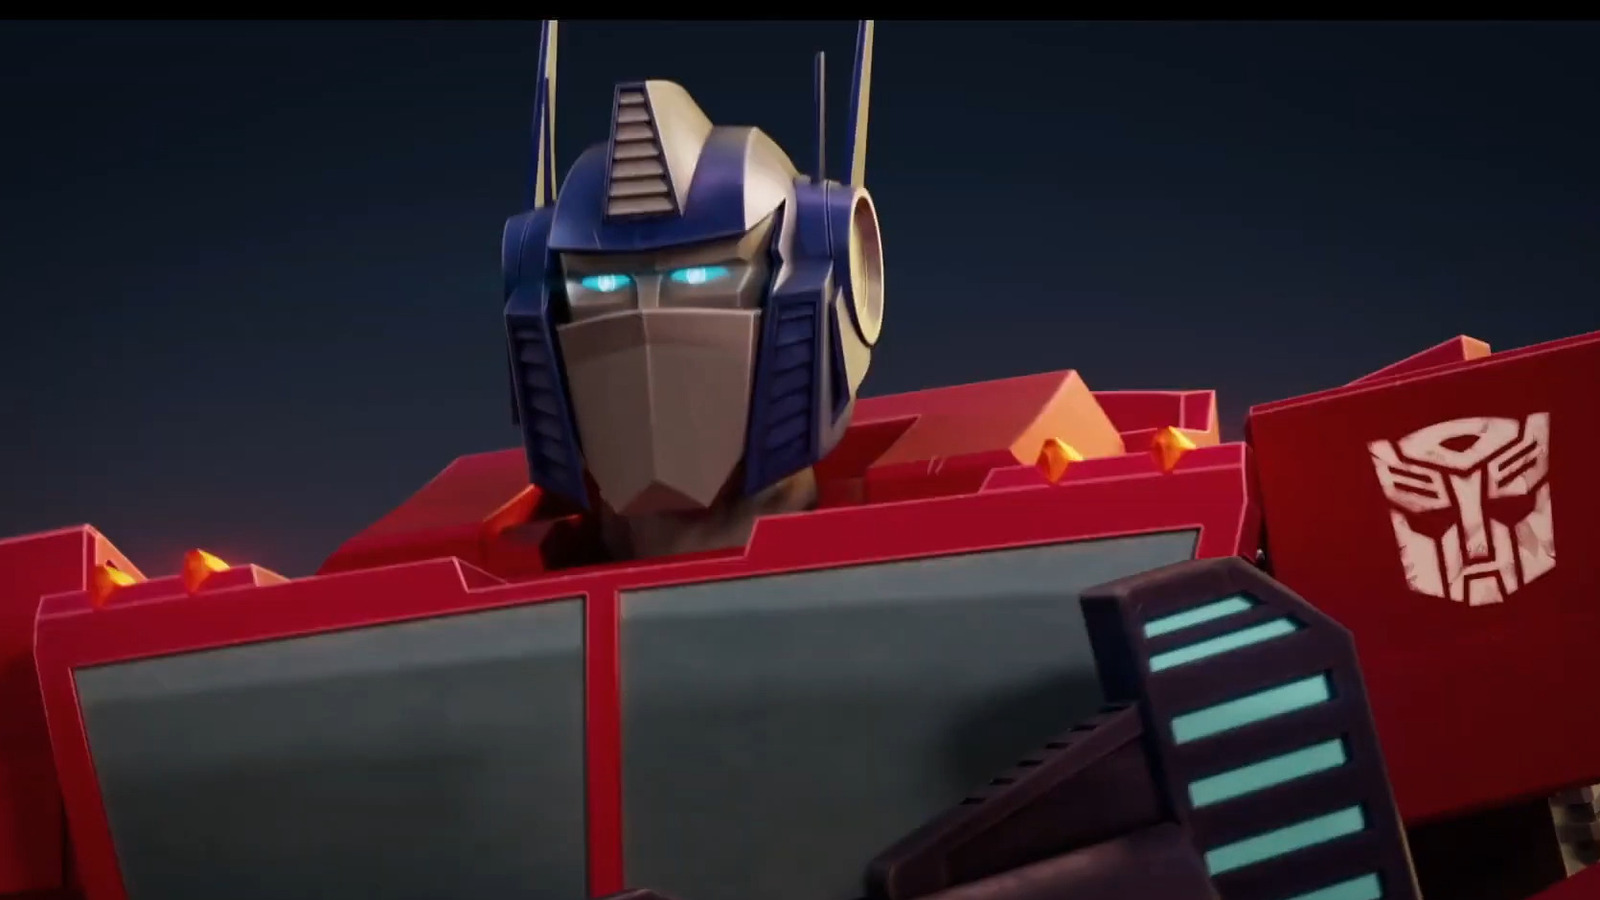 Watch Transformers: Cyberverse